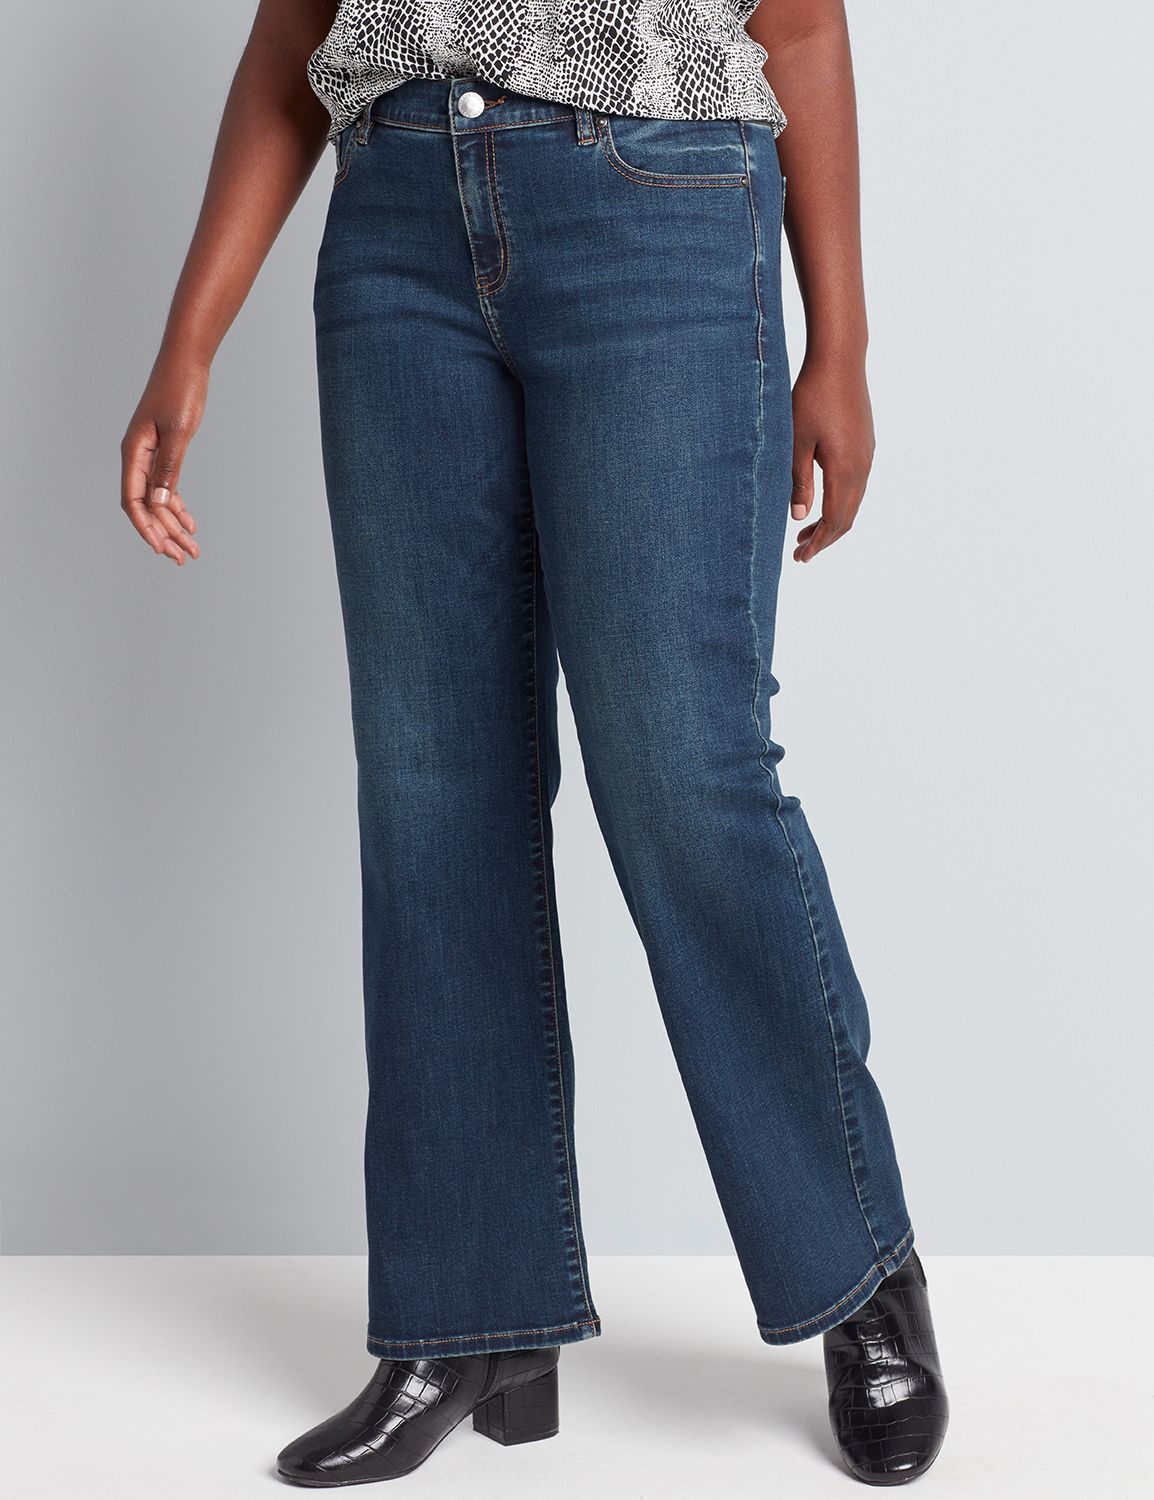 Lane Bryant magic waistband jeans women sz 16 Low rise straight deluxe fit  denim